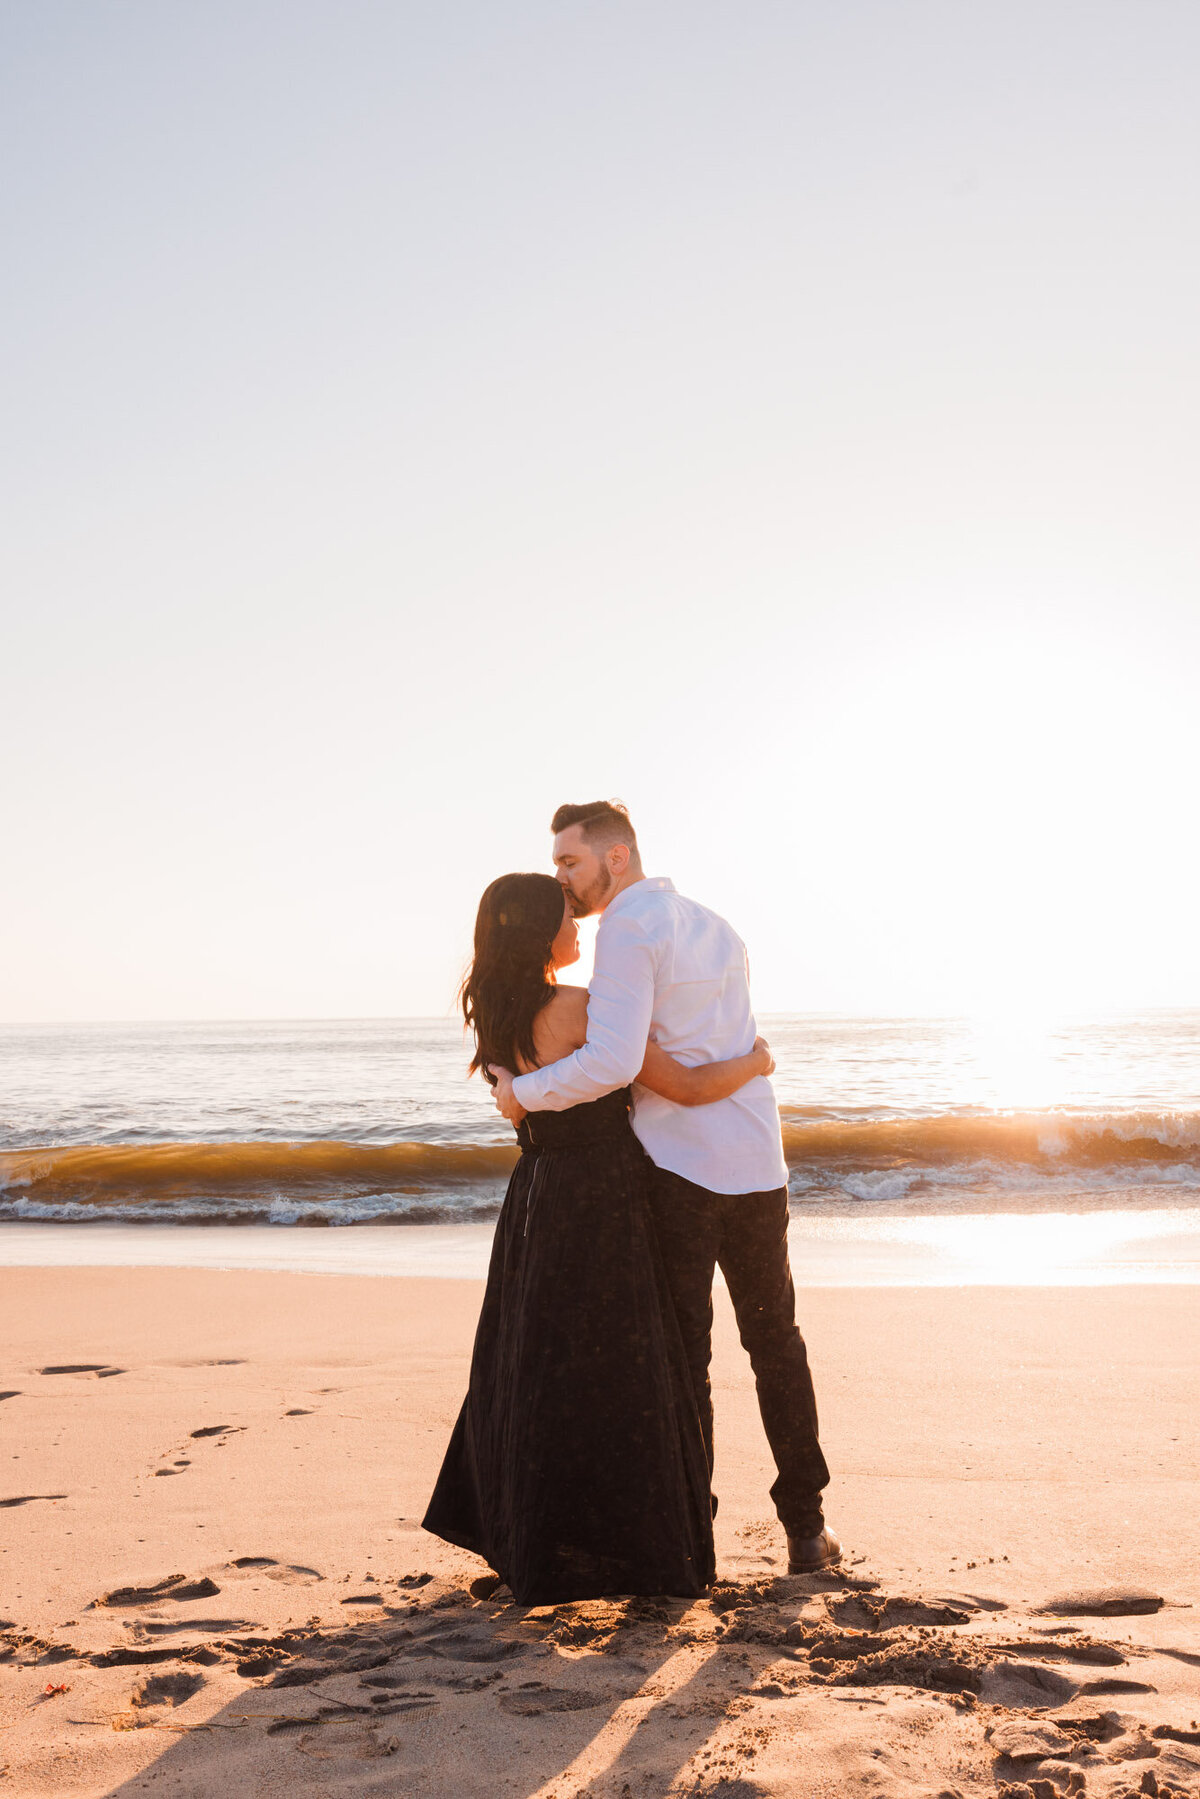 Kyle Woolum + Stephanie-Proposal Engagement-Half Moon Bay-Dunes Beach-San Francisco Wedding Photographer-San Francisco Photographer-Half Moon Bay Photographer-Emily Pillon Photography-S-092323-69